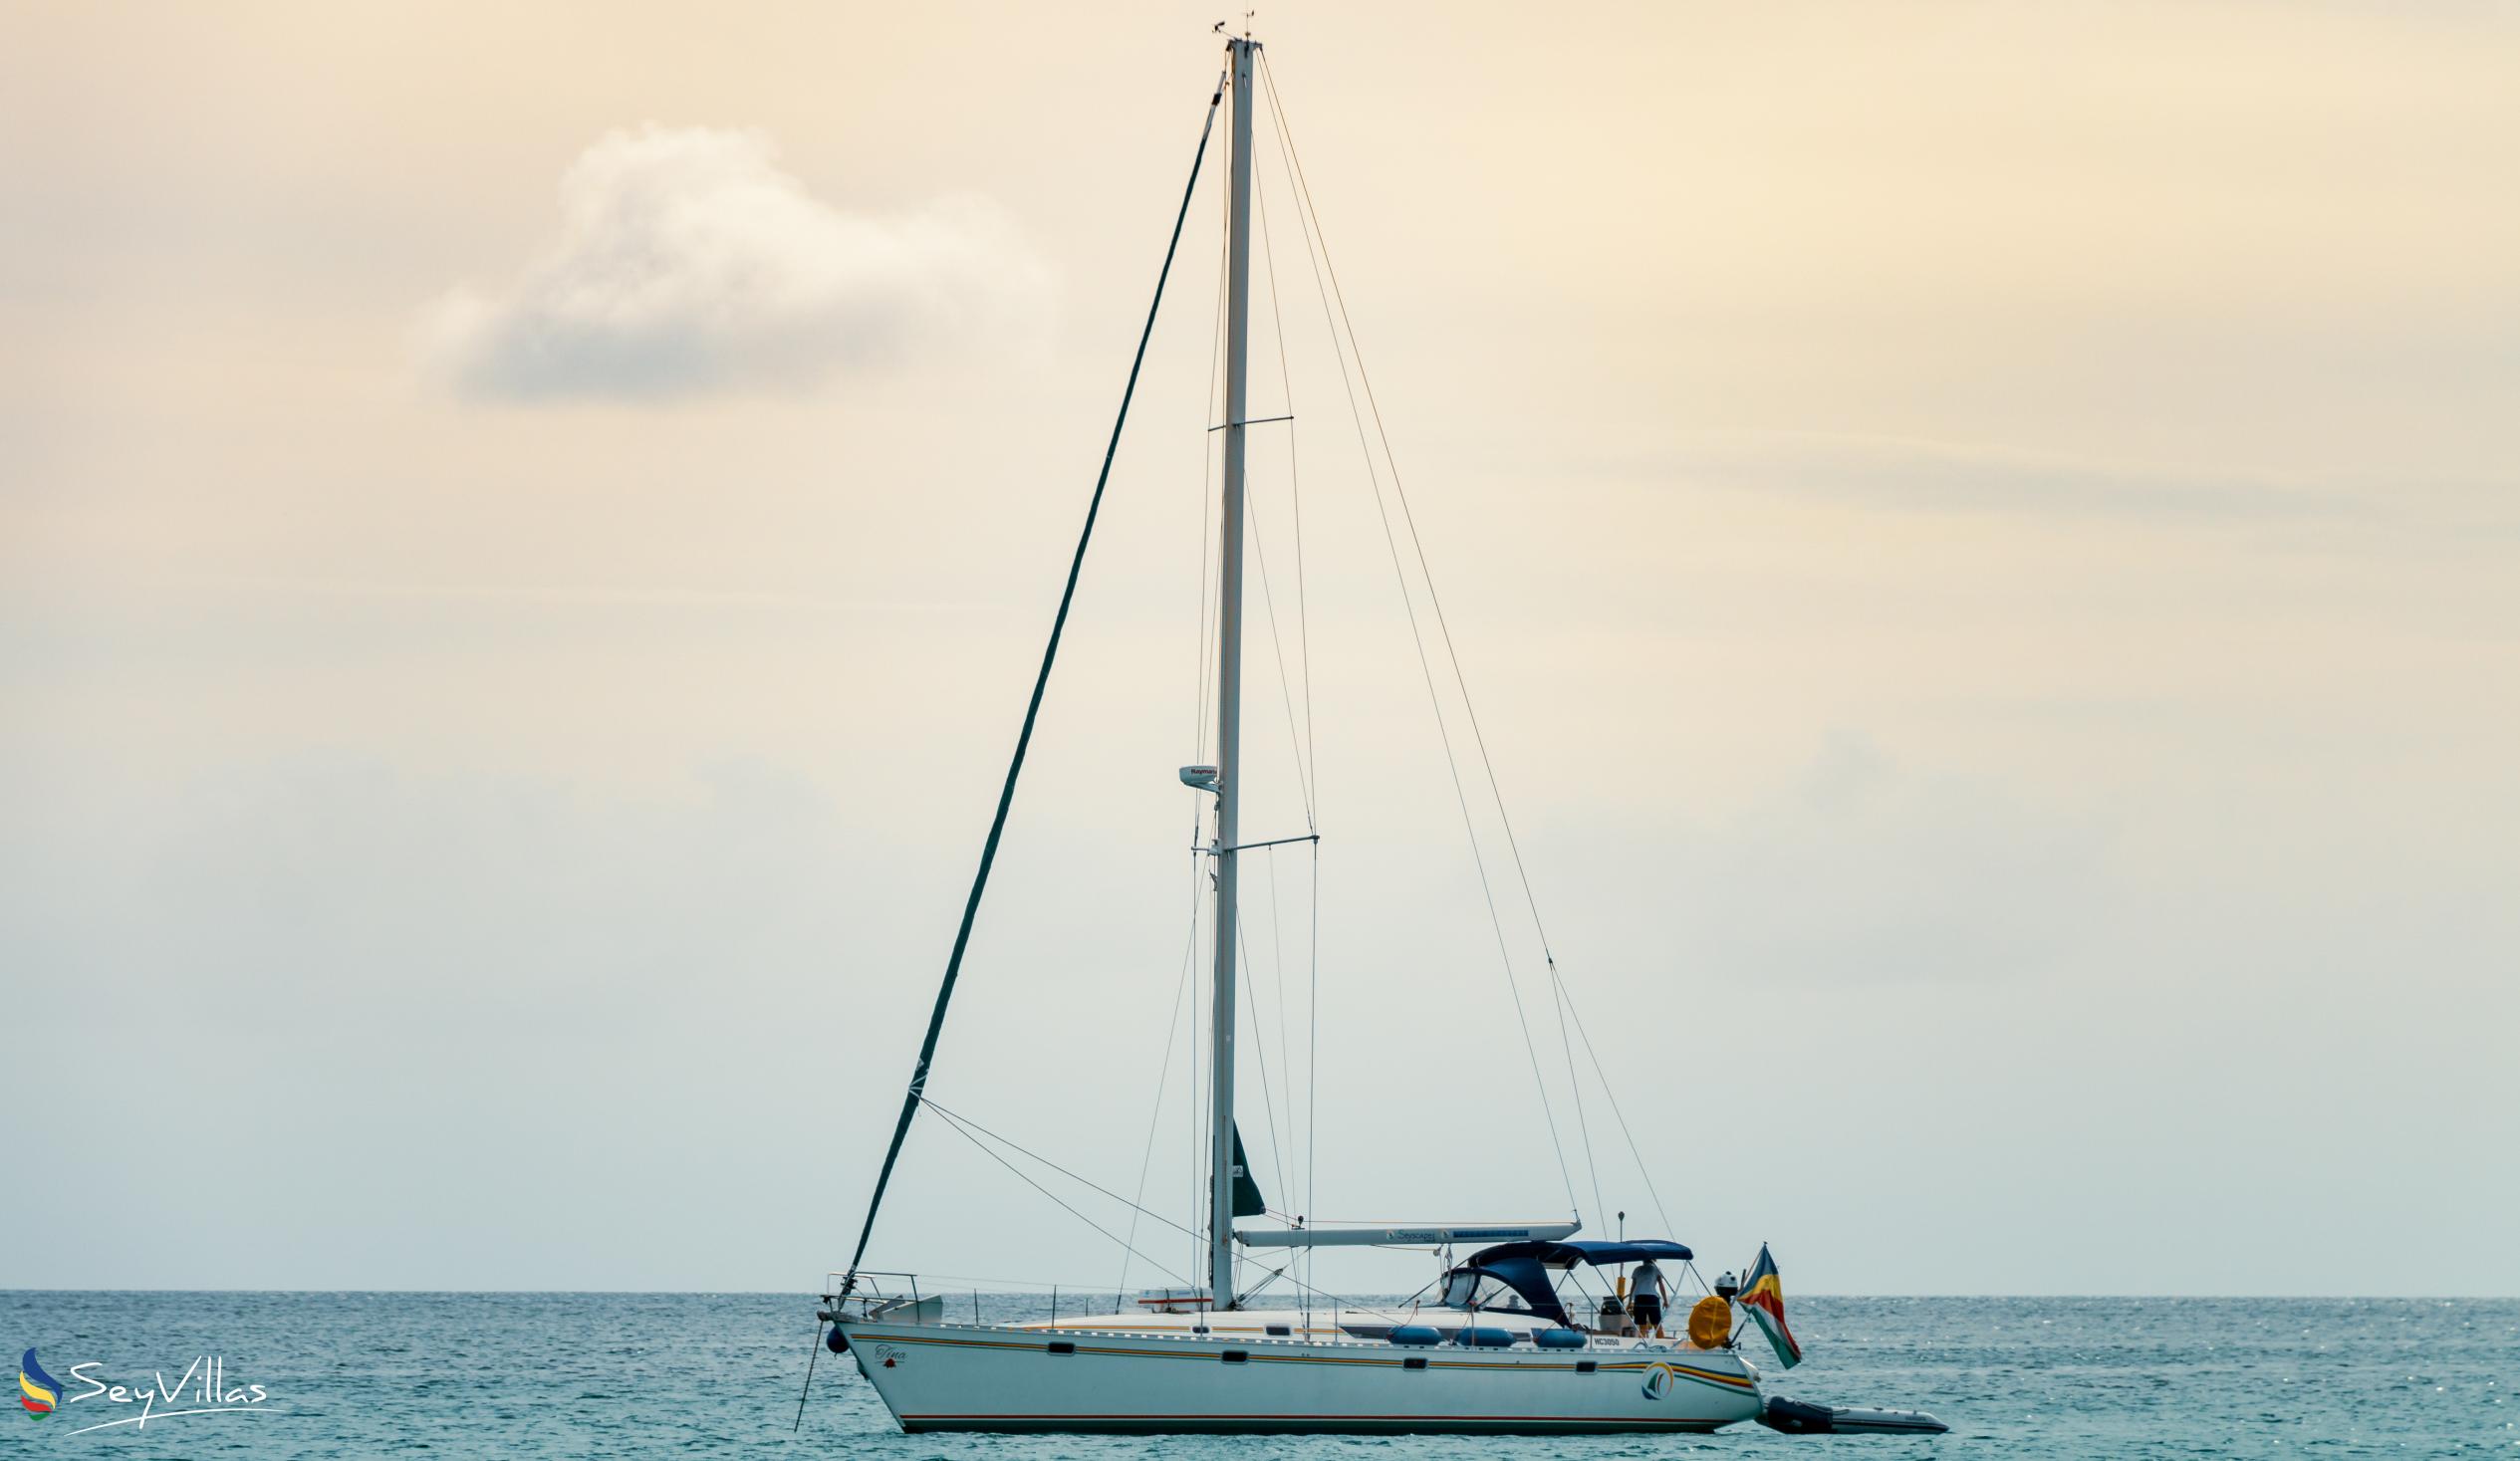 Foto 5: Seyscapes Yacht Charter - Extérieur - Seychelles (Seychelles)